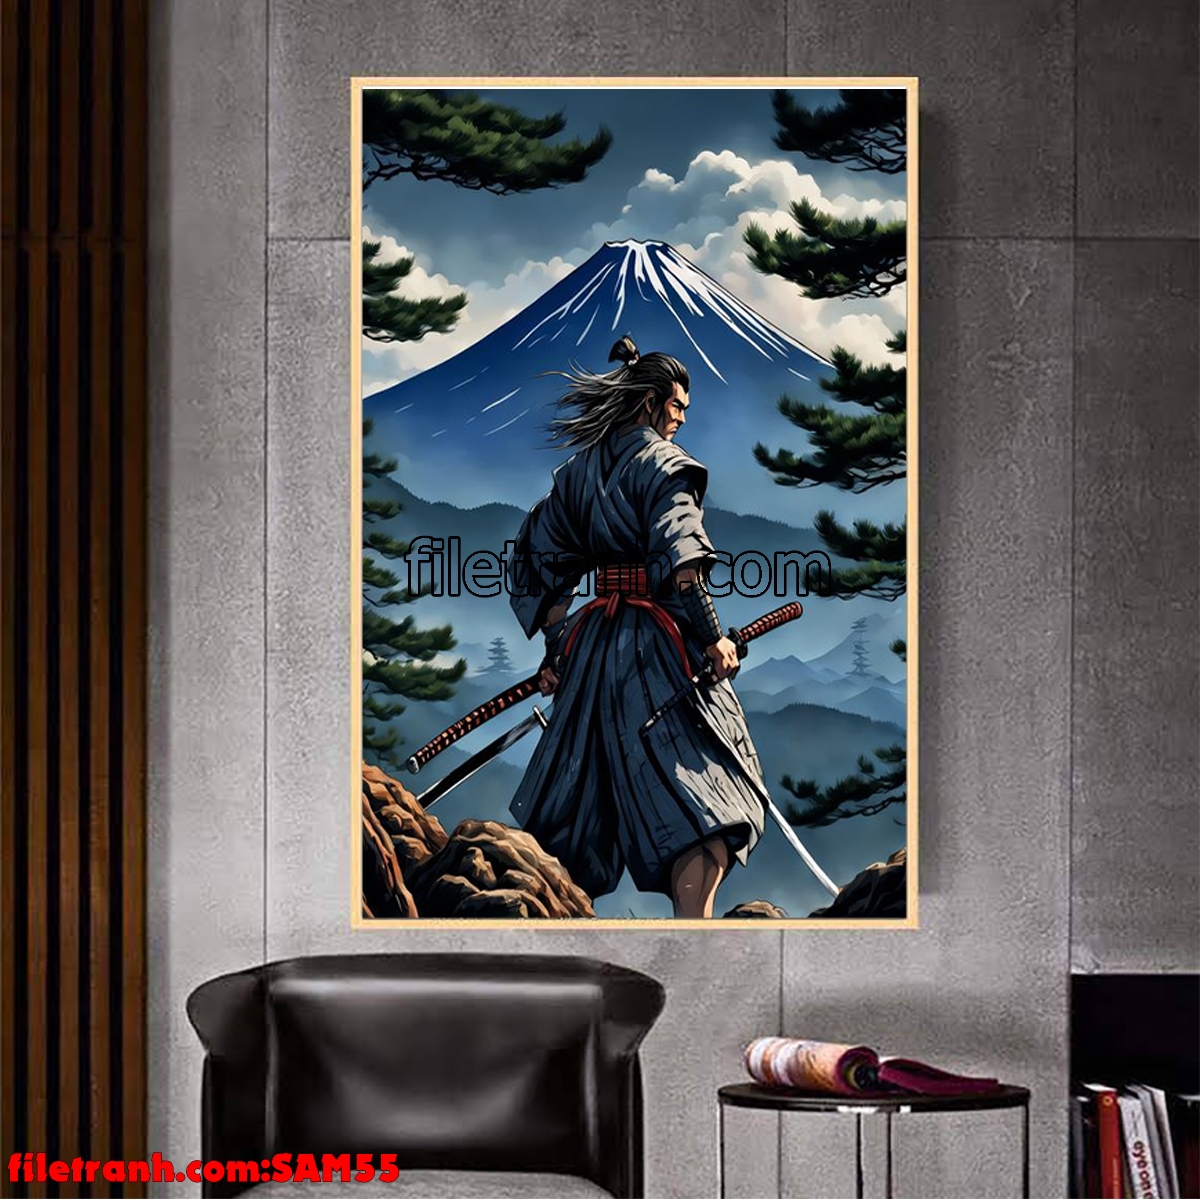 https://filetranh.com/samurai/file-tranh-samurai-vo-si-nhat-ban-sam55.html